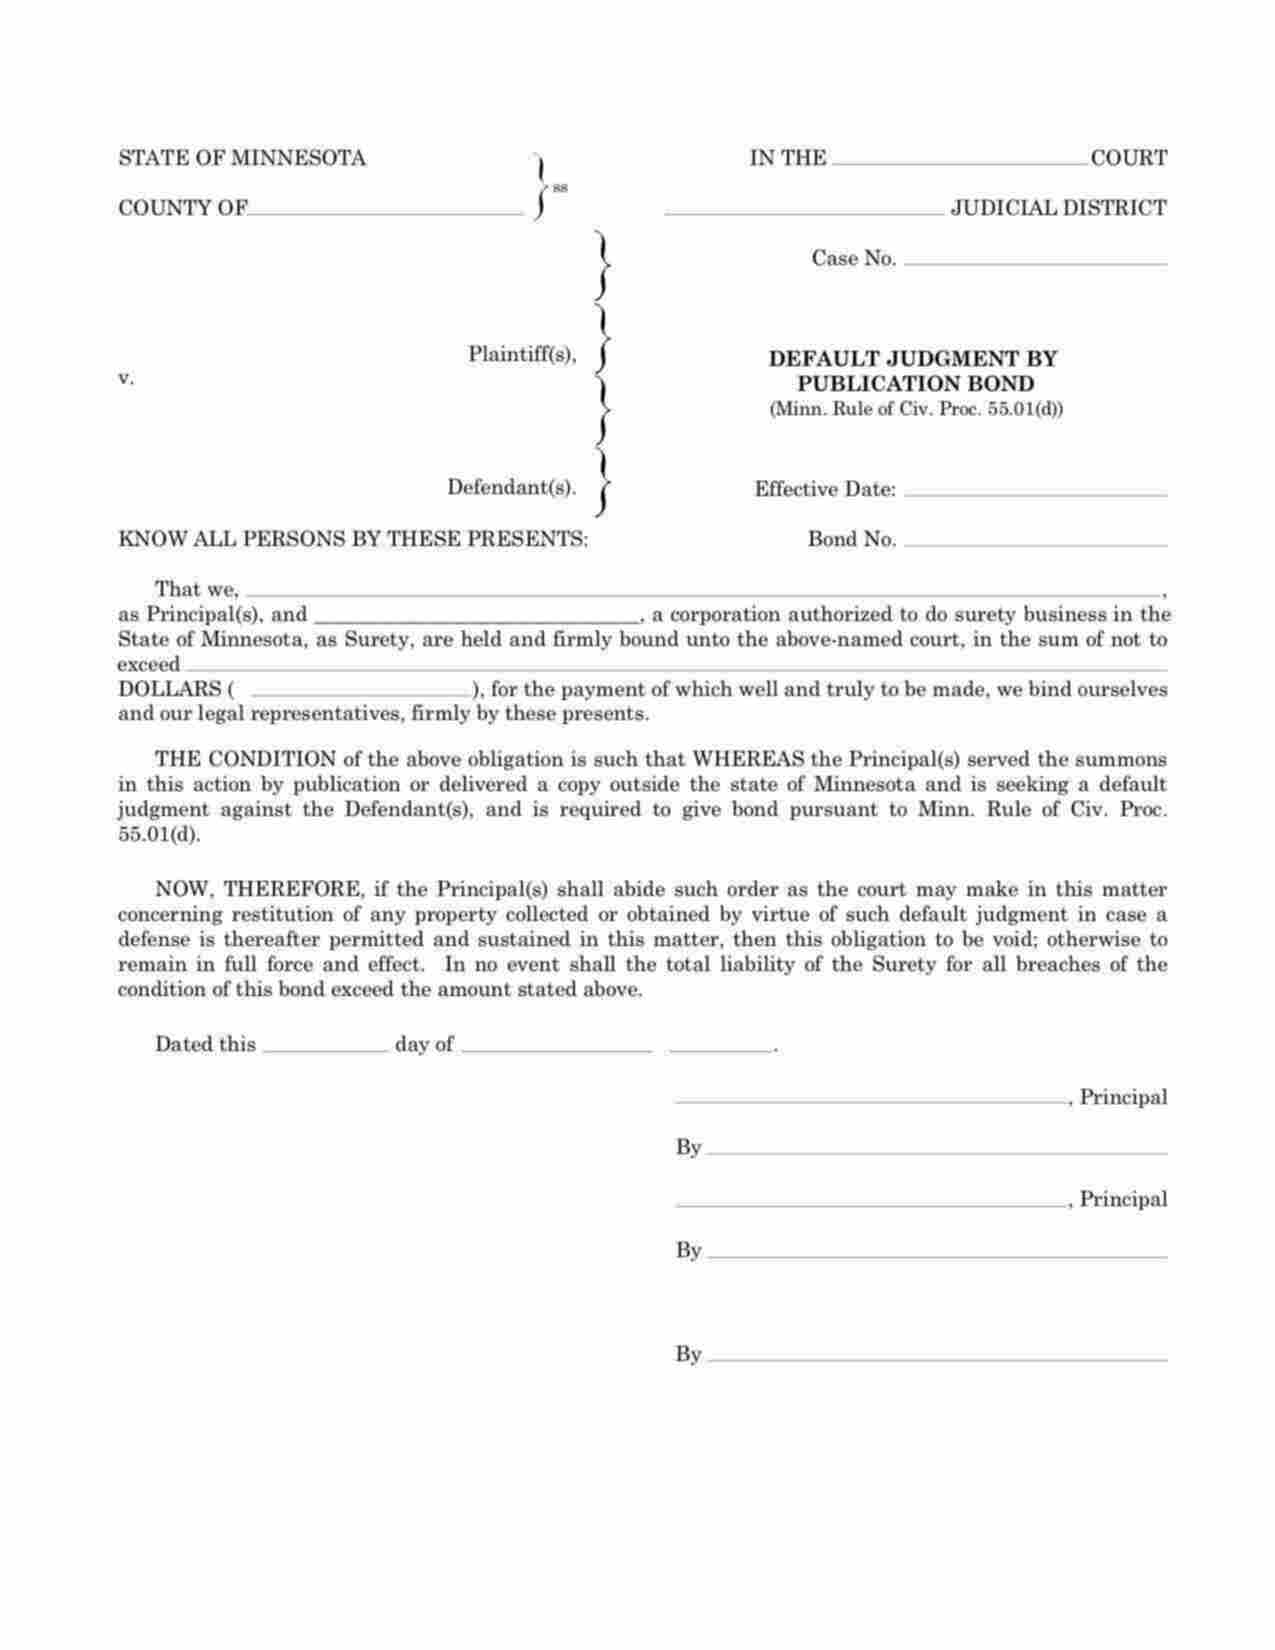 Minnesota Default Judgment by Publication Bond Form